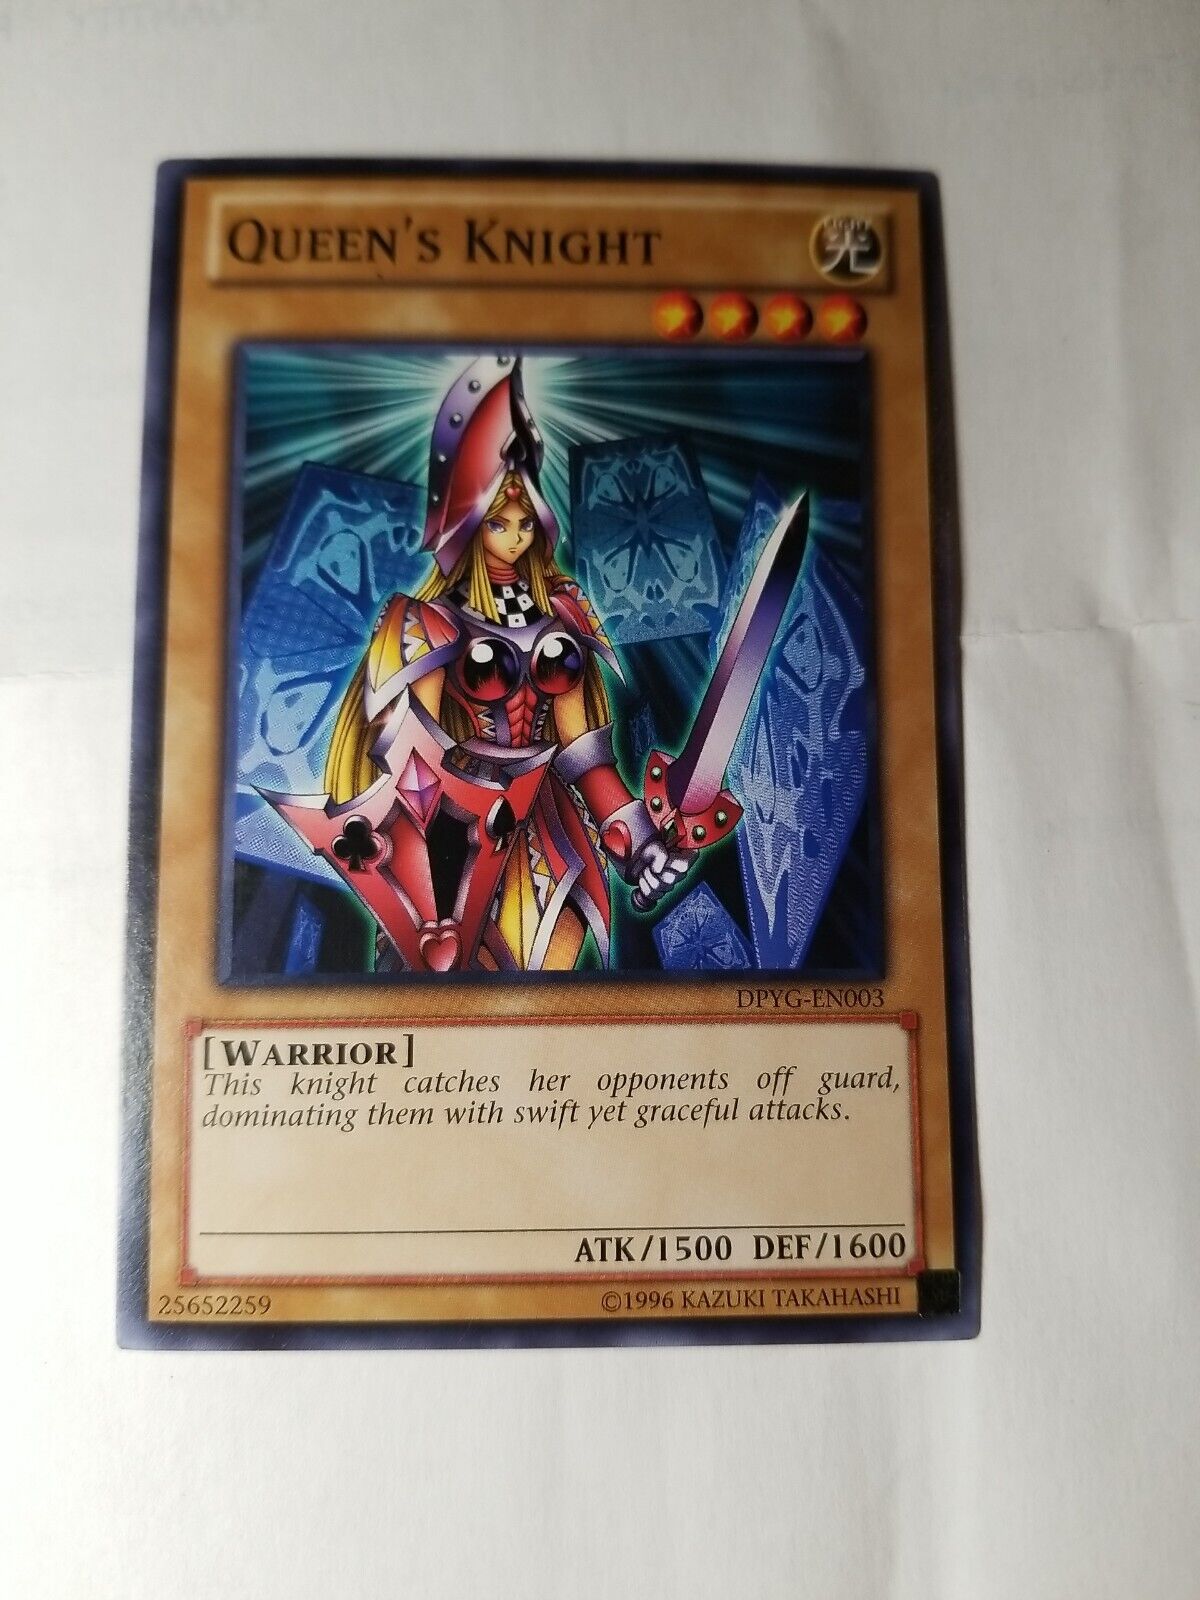 Vintage 1996 Yu-Gi-OH Queens Knight DPYG-EN003